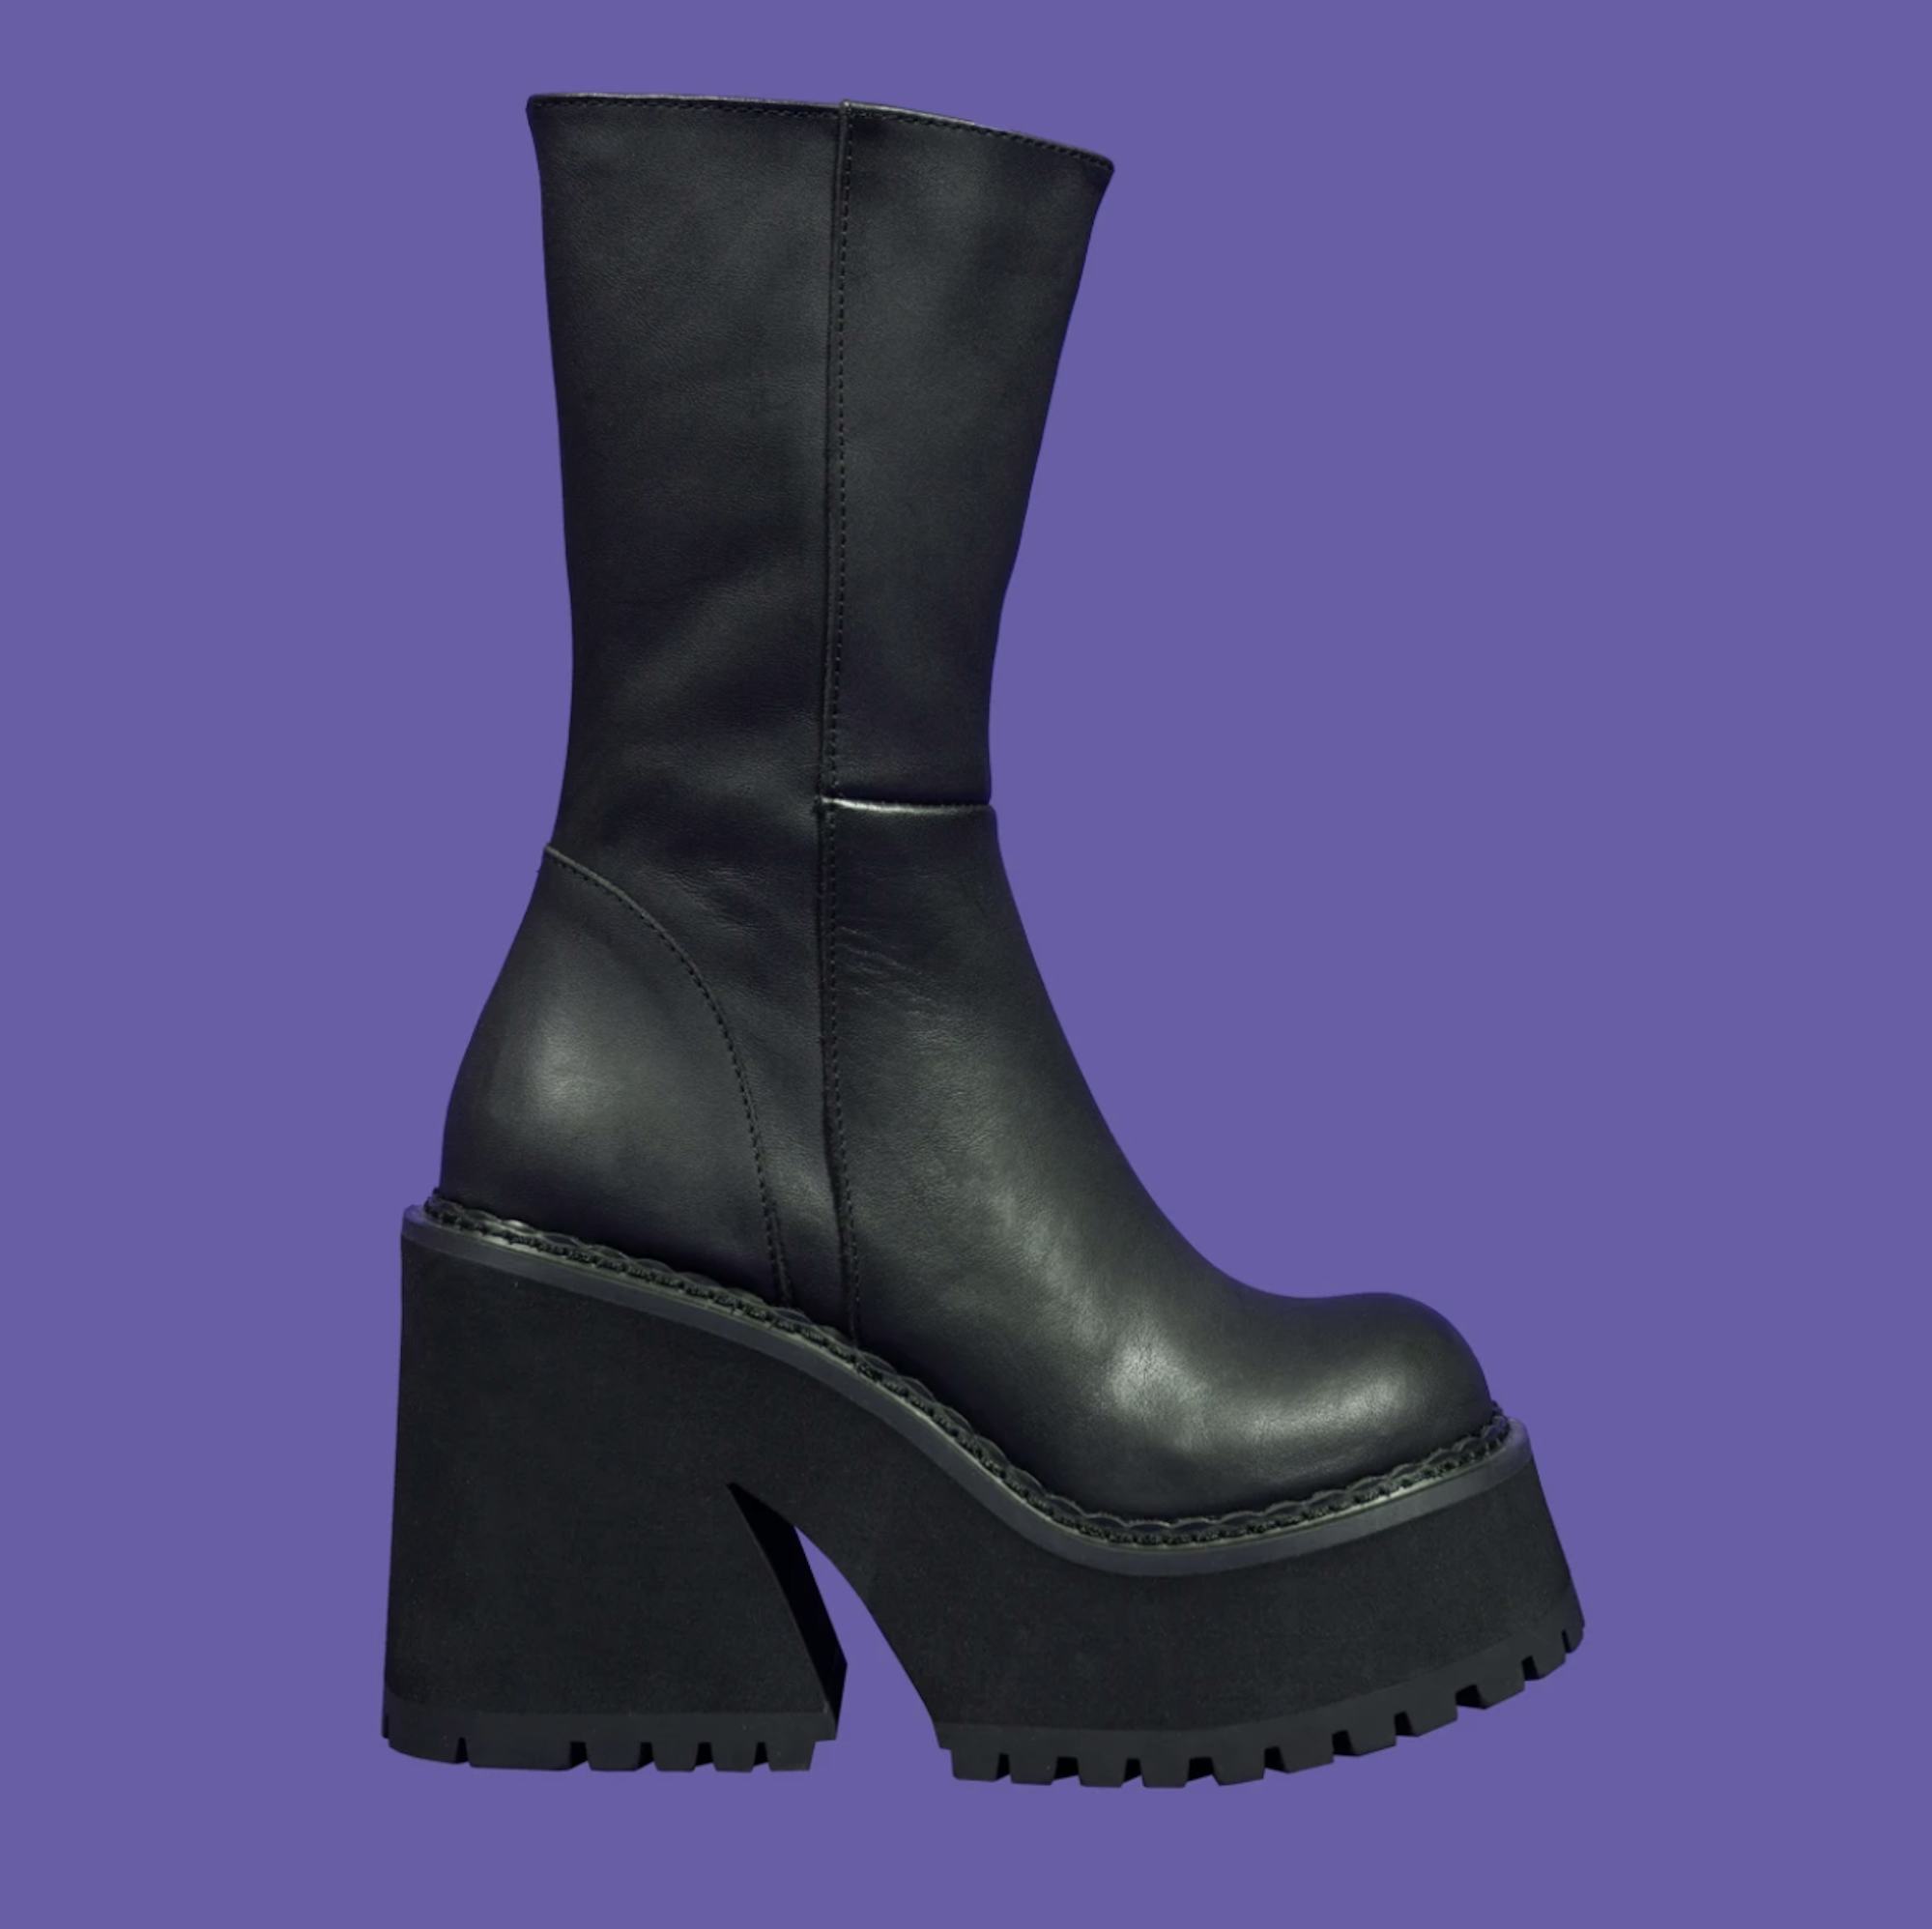 17 Black Platform Boots For 2022's Gothcore Trend